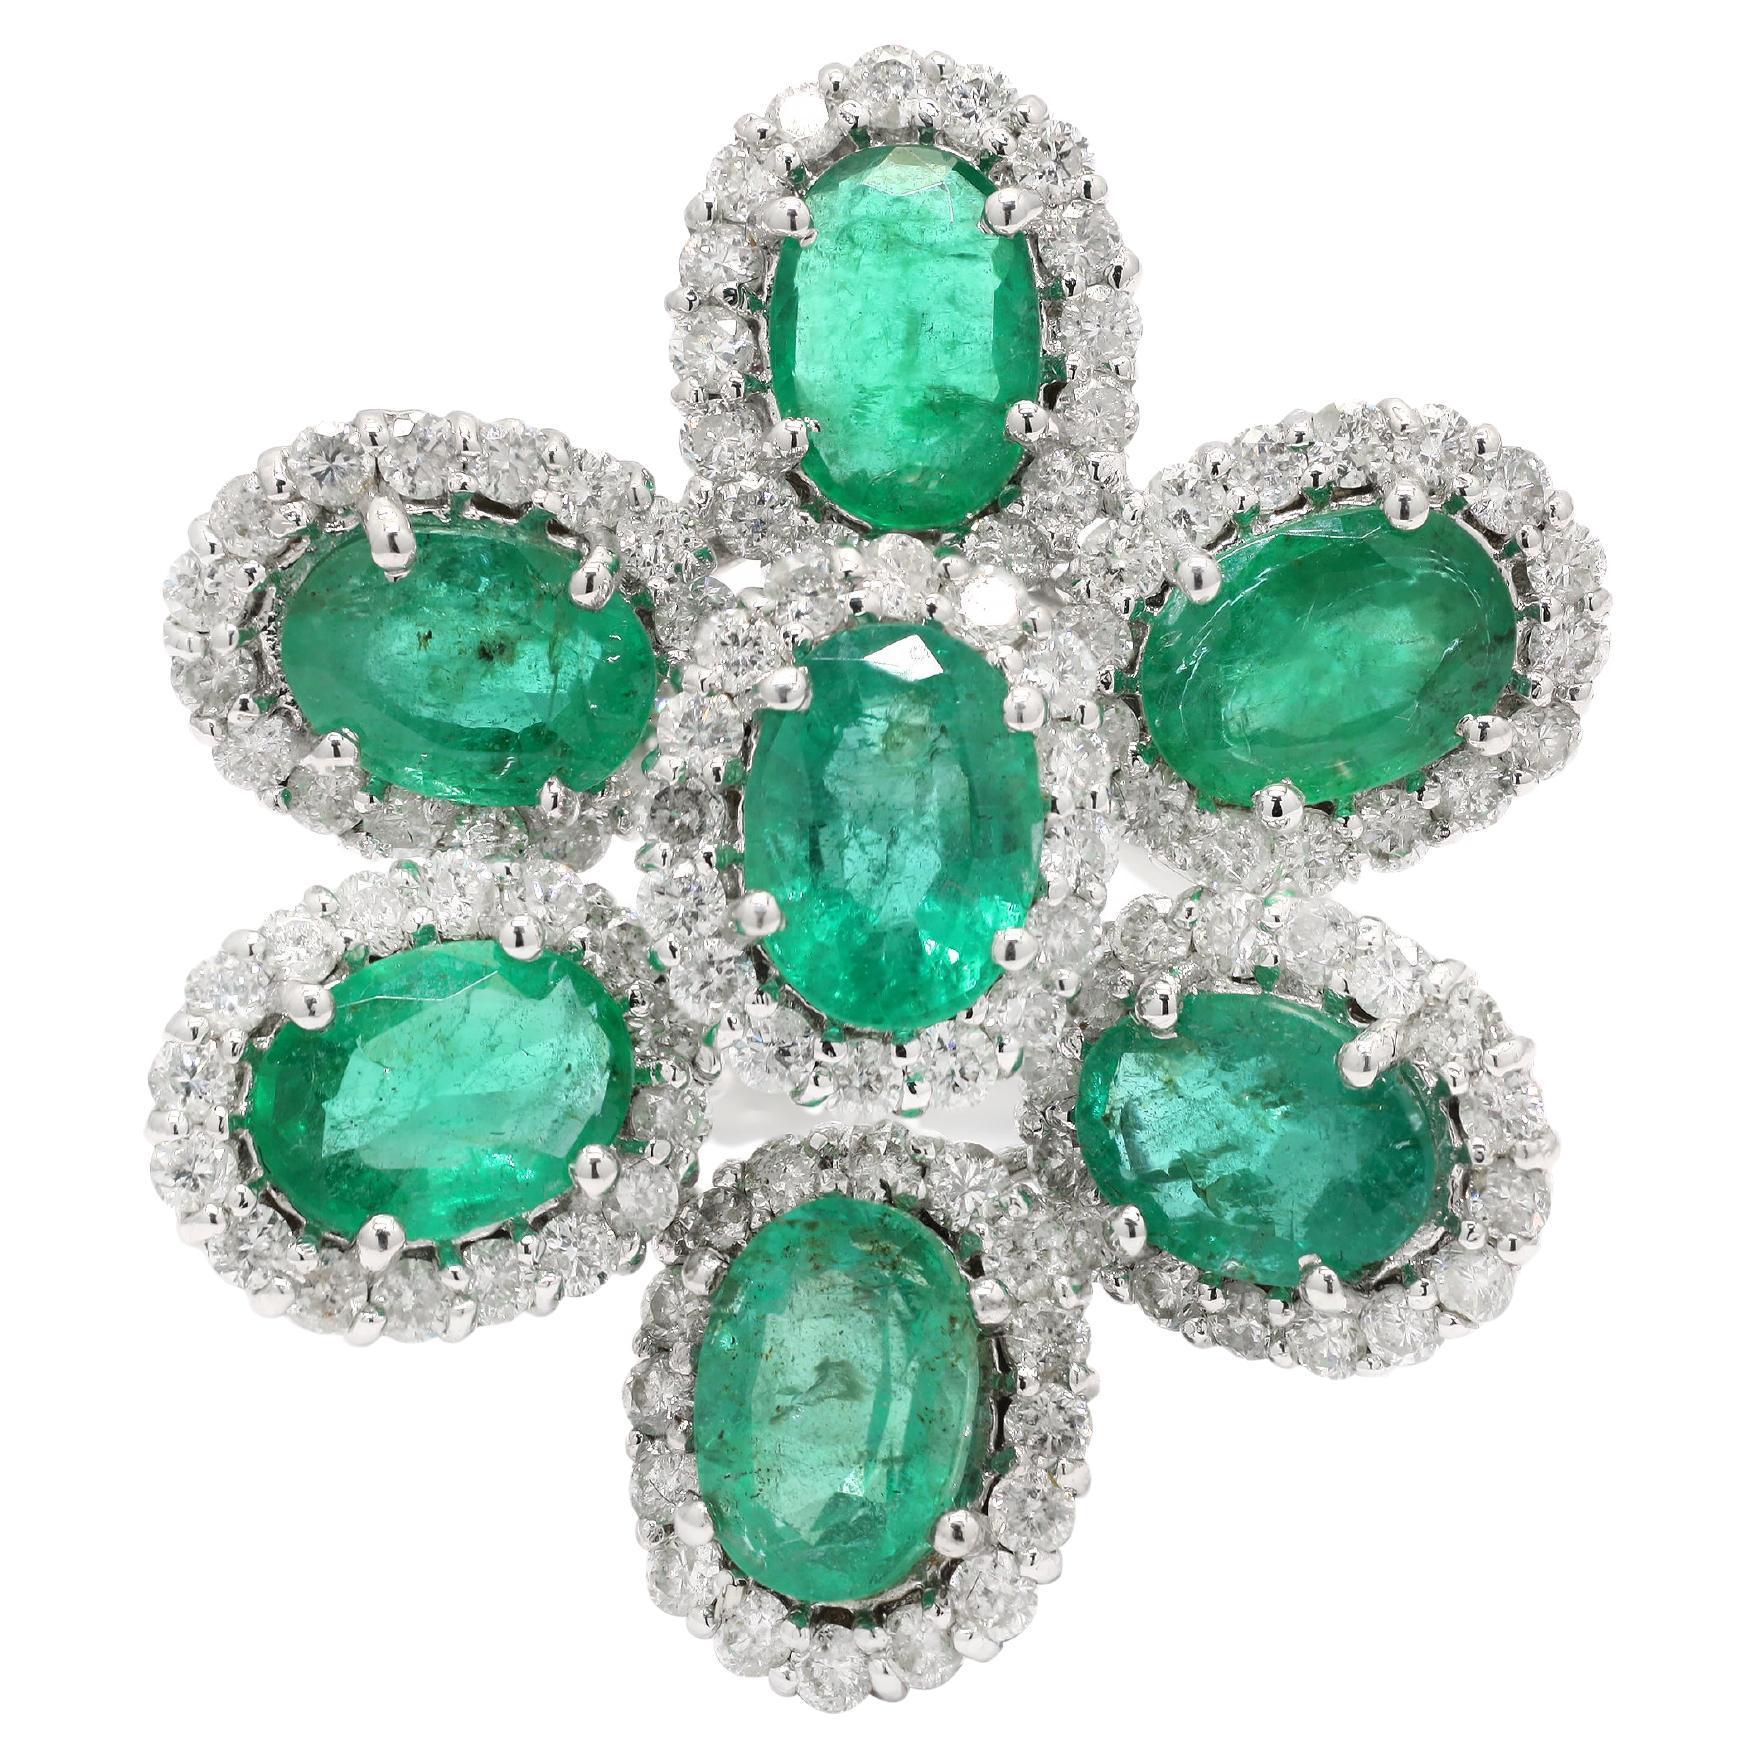 Statement 5 ct Emerald Flower Ring with Halo Diamonds in 14 Karat White Gold